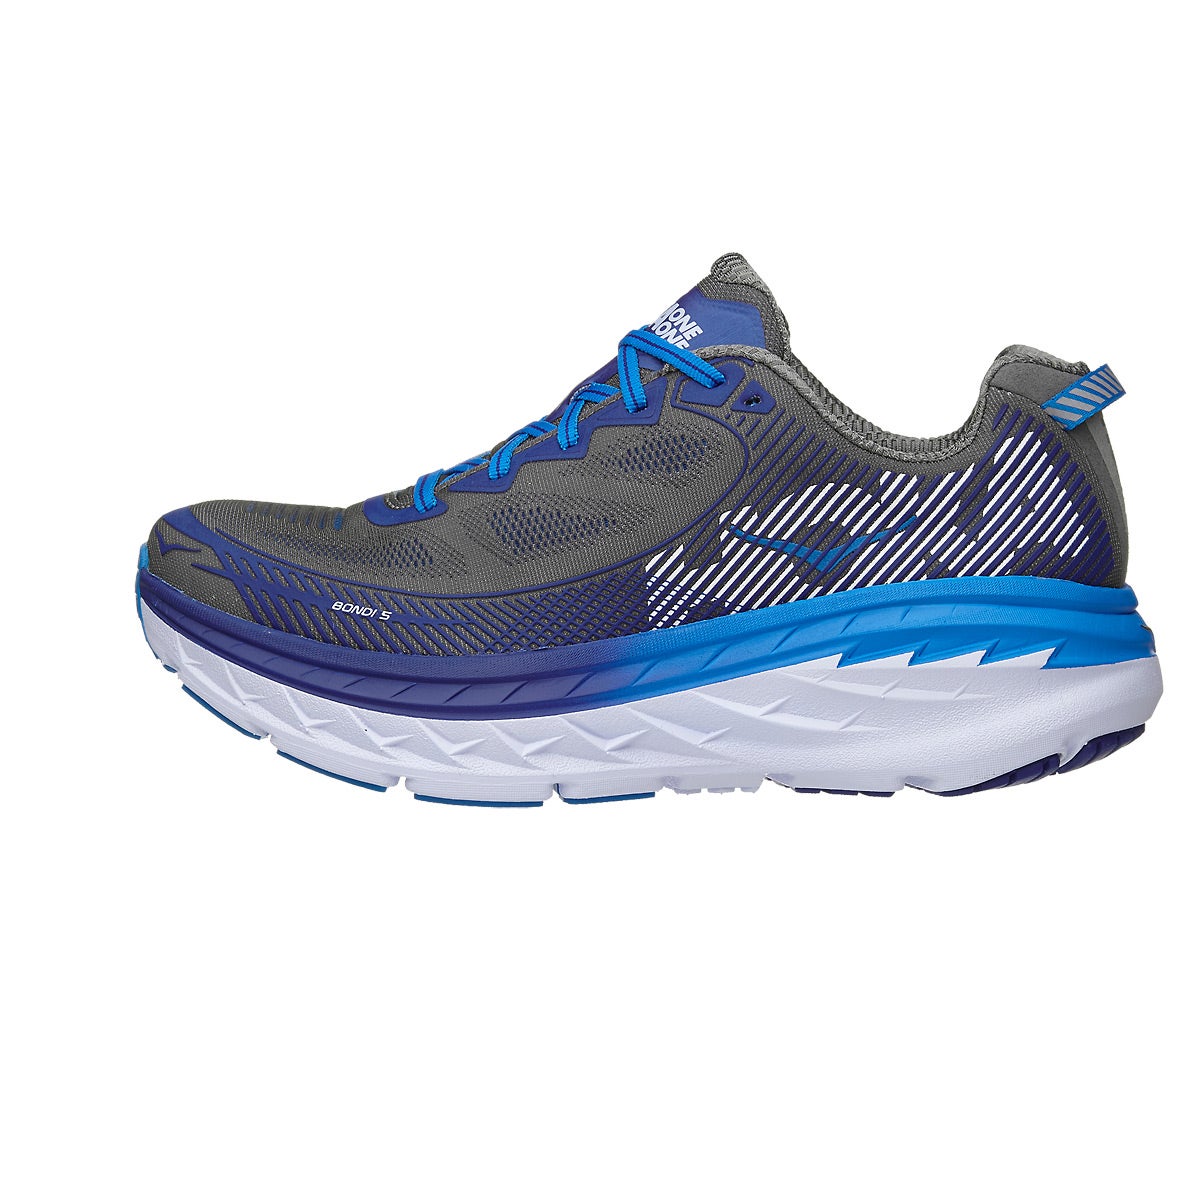 HOKA ONE ONE Bondi 5 Men's Shoes Charcoal Grey/Blue 360° View | Running ...